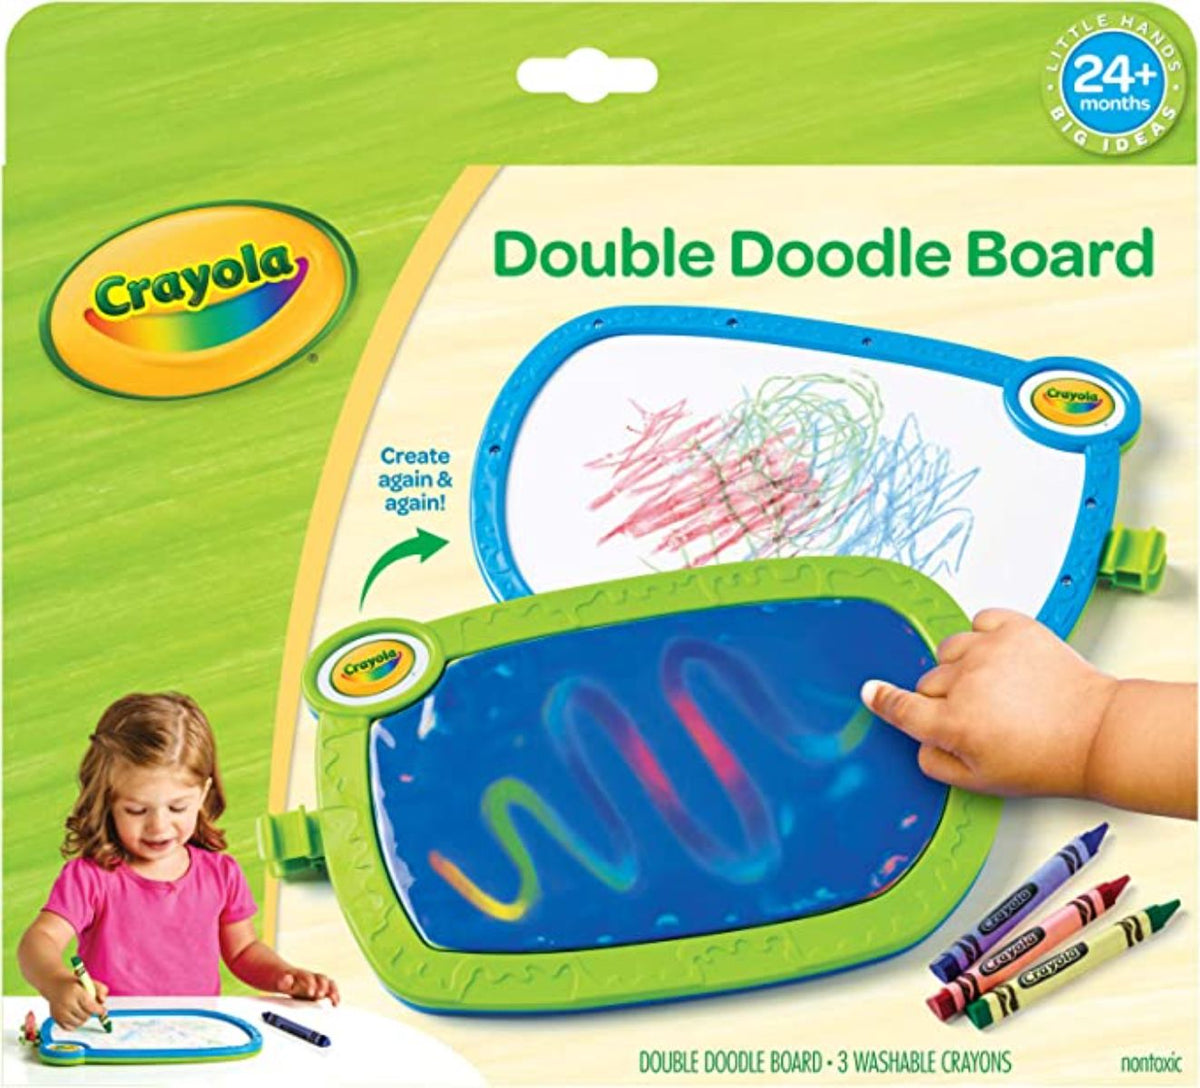 Double Doodle Board